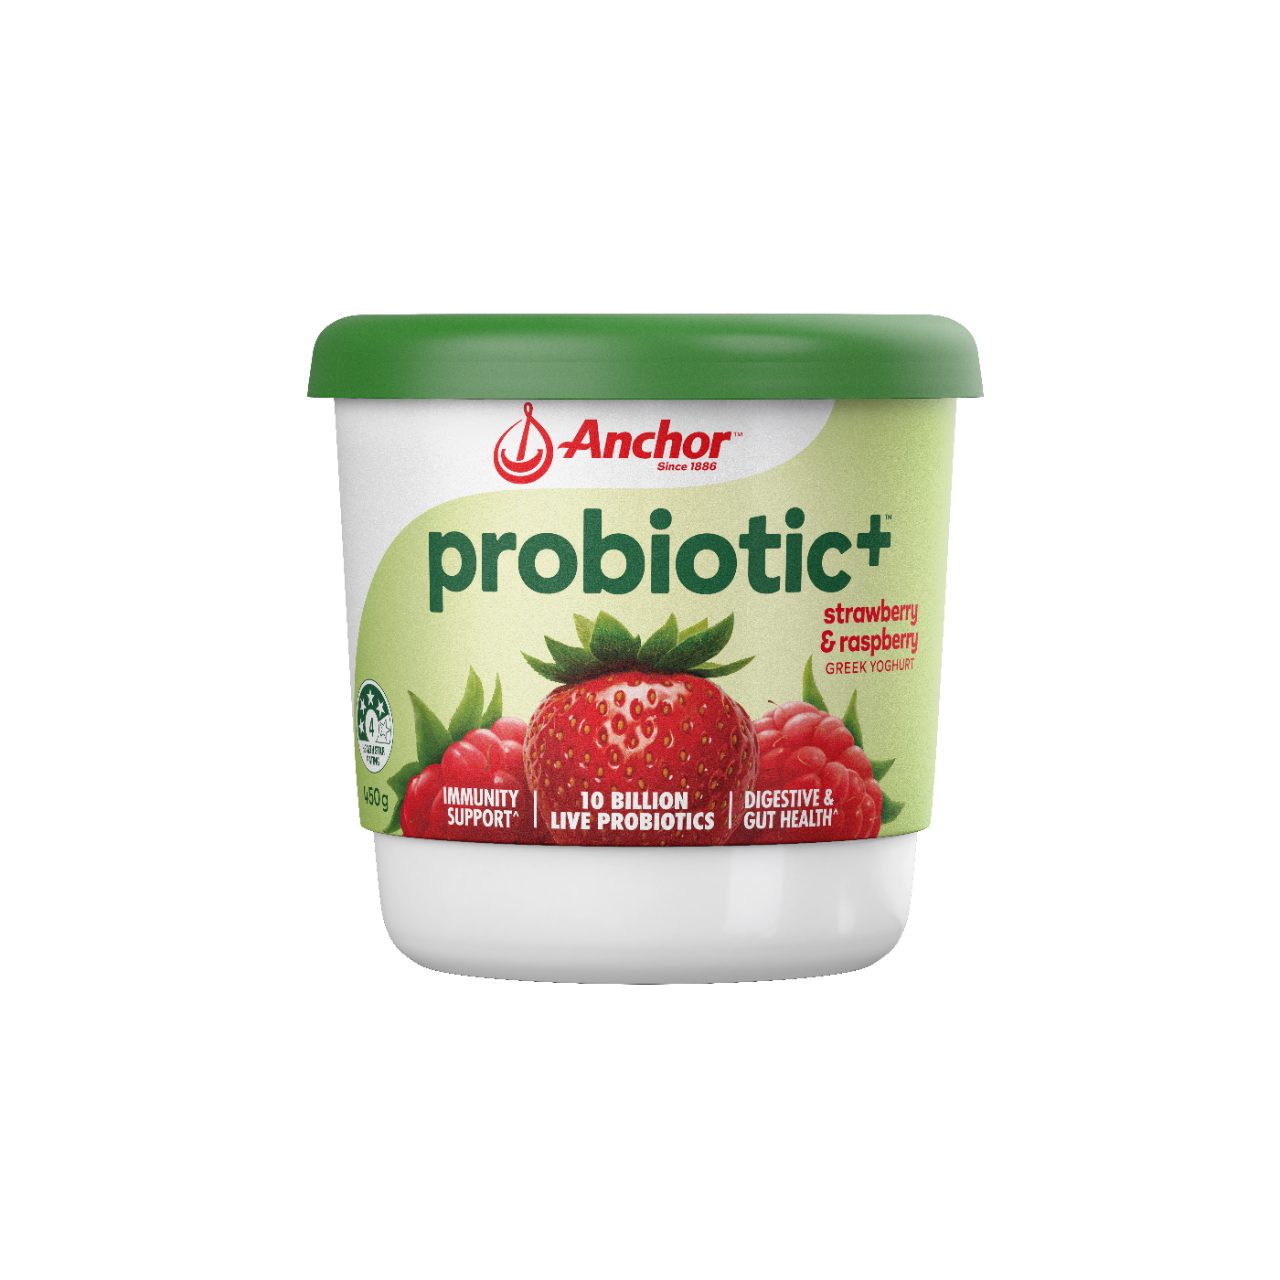 Anchor Probiotic+ Strawberry and Raspberry Yoghurt